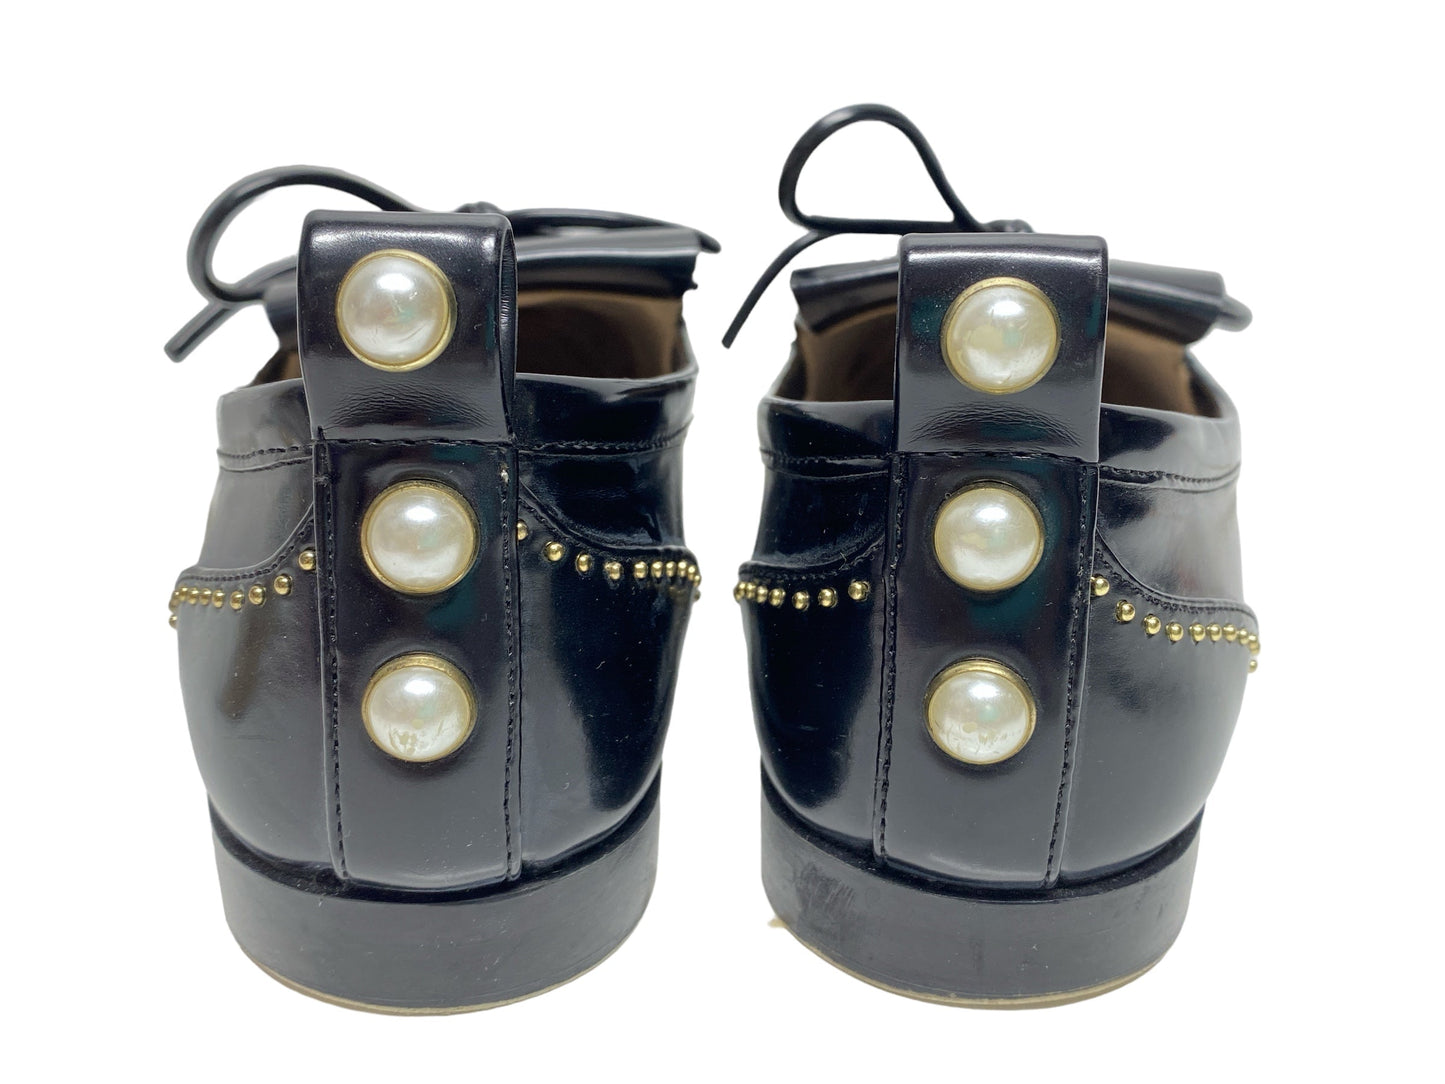 Shoes Flats By Zara Basic  Size: 6.5